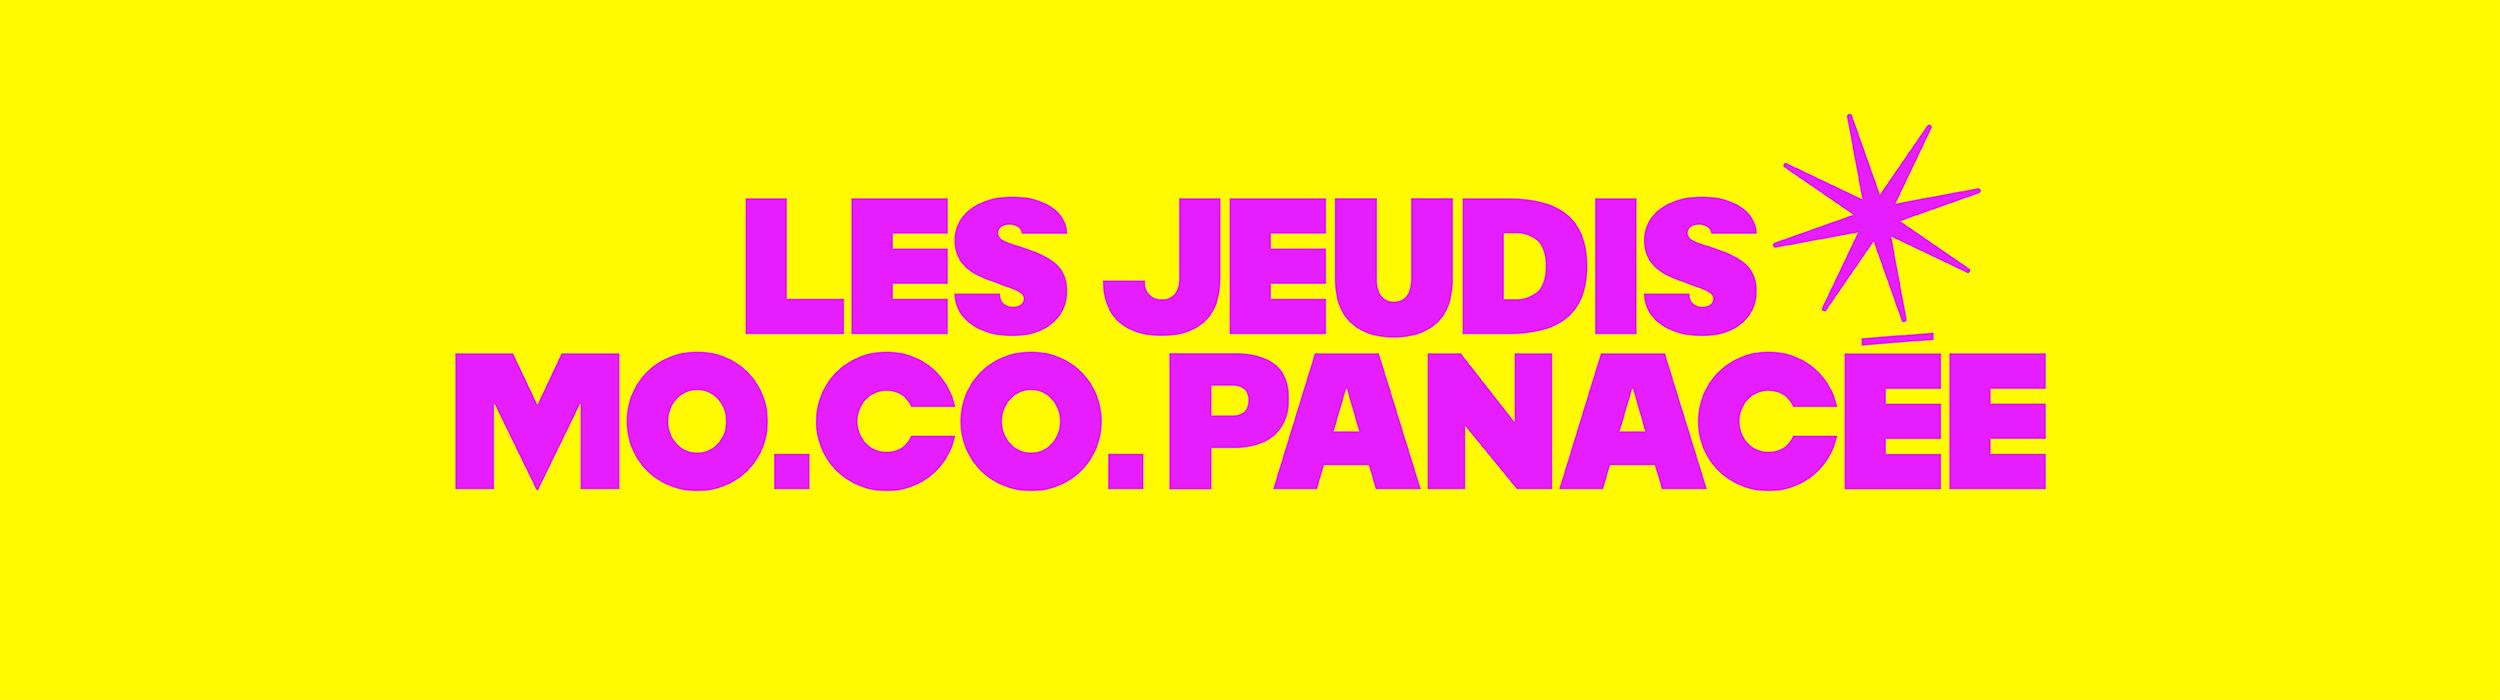 Les Jeudis MO.CO. Panacée